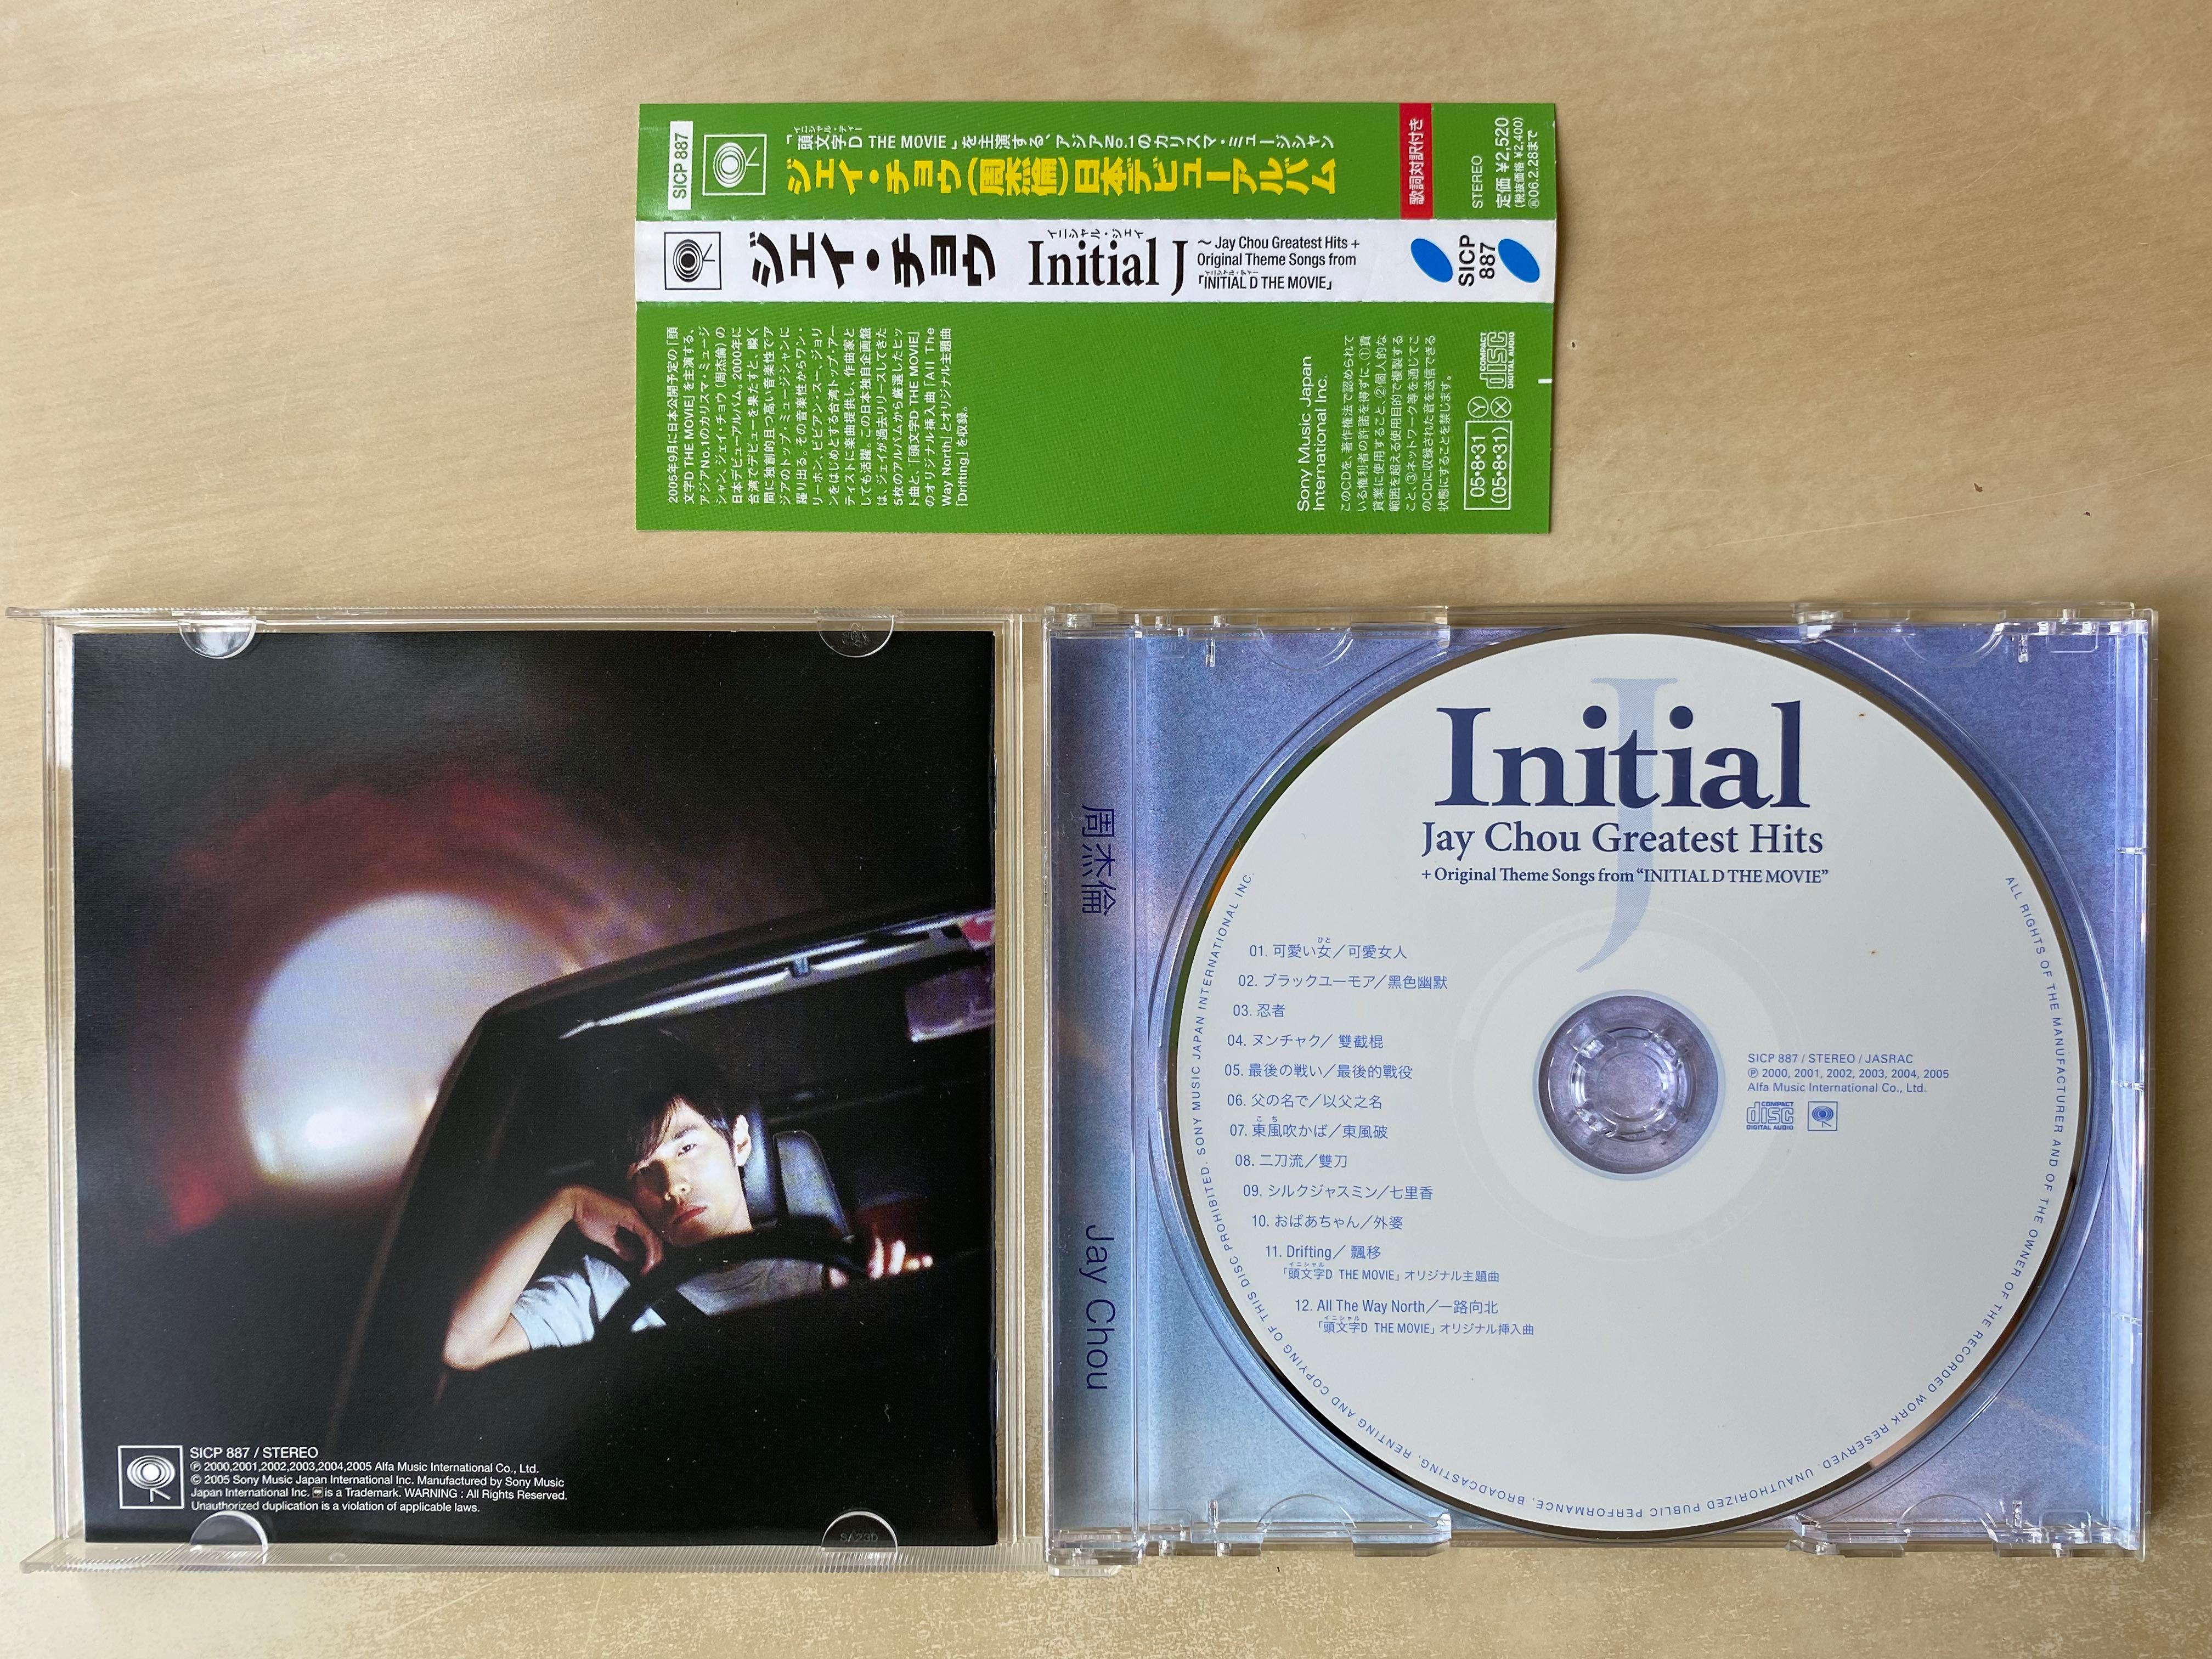 CD丨Initial J 周杰倫Jay Chou Greatest Hits + 電影頭文字D 主題曲 